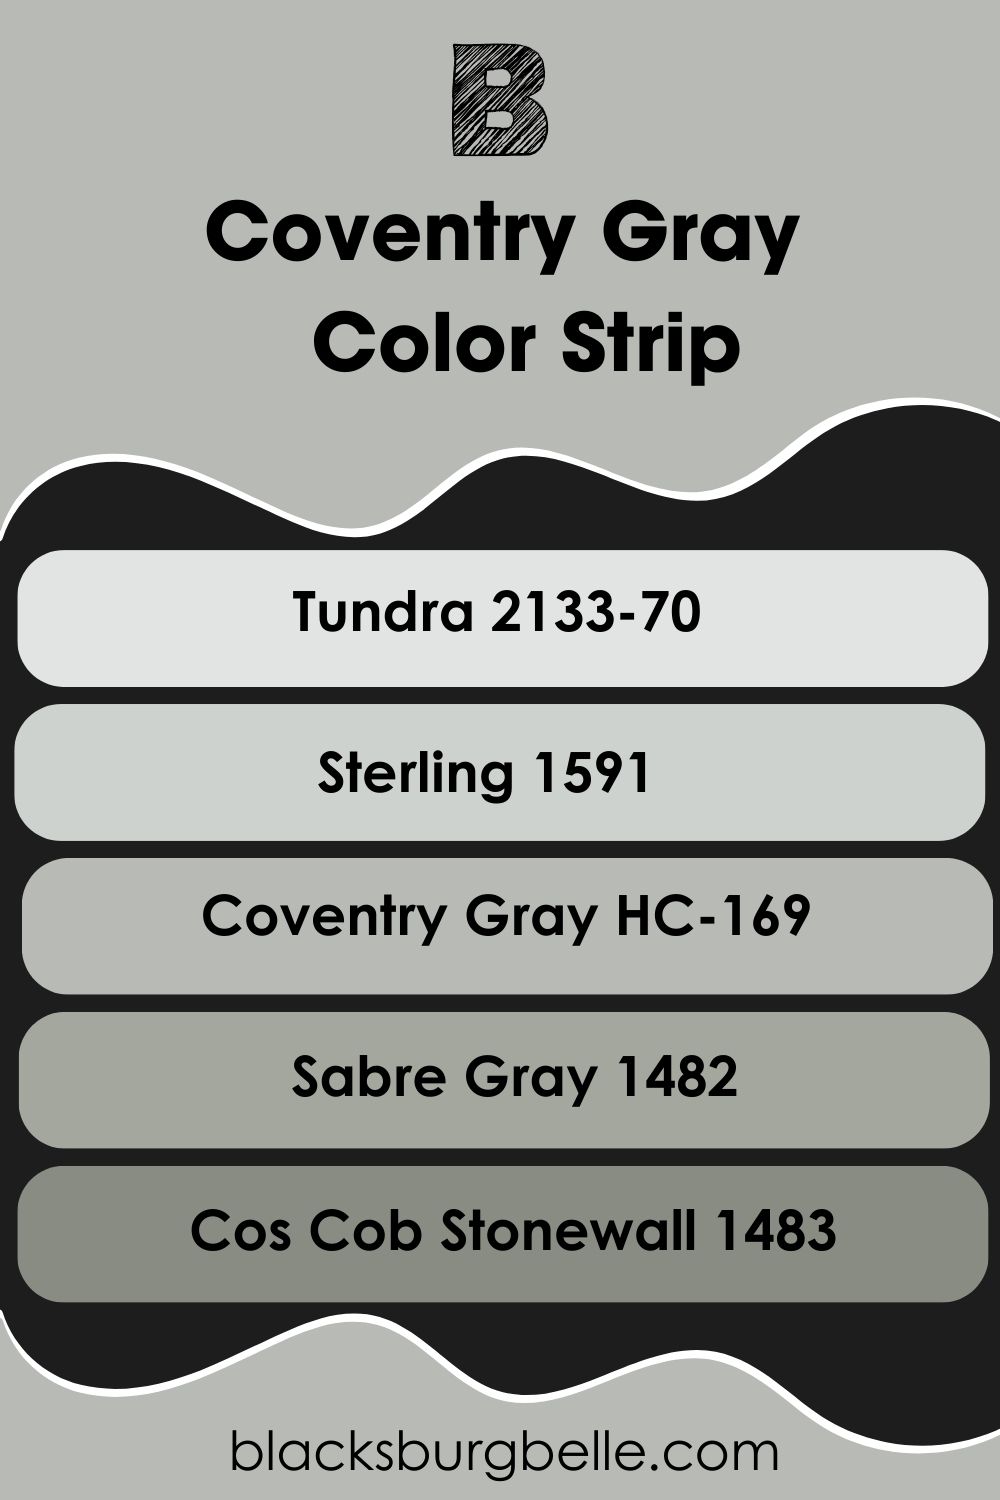  Coventry Gray Color Strip